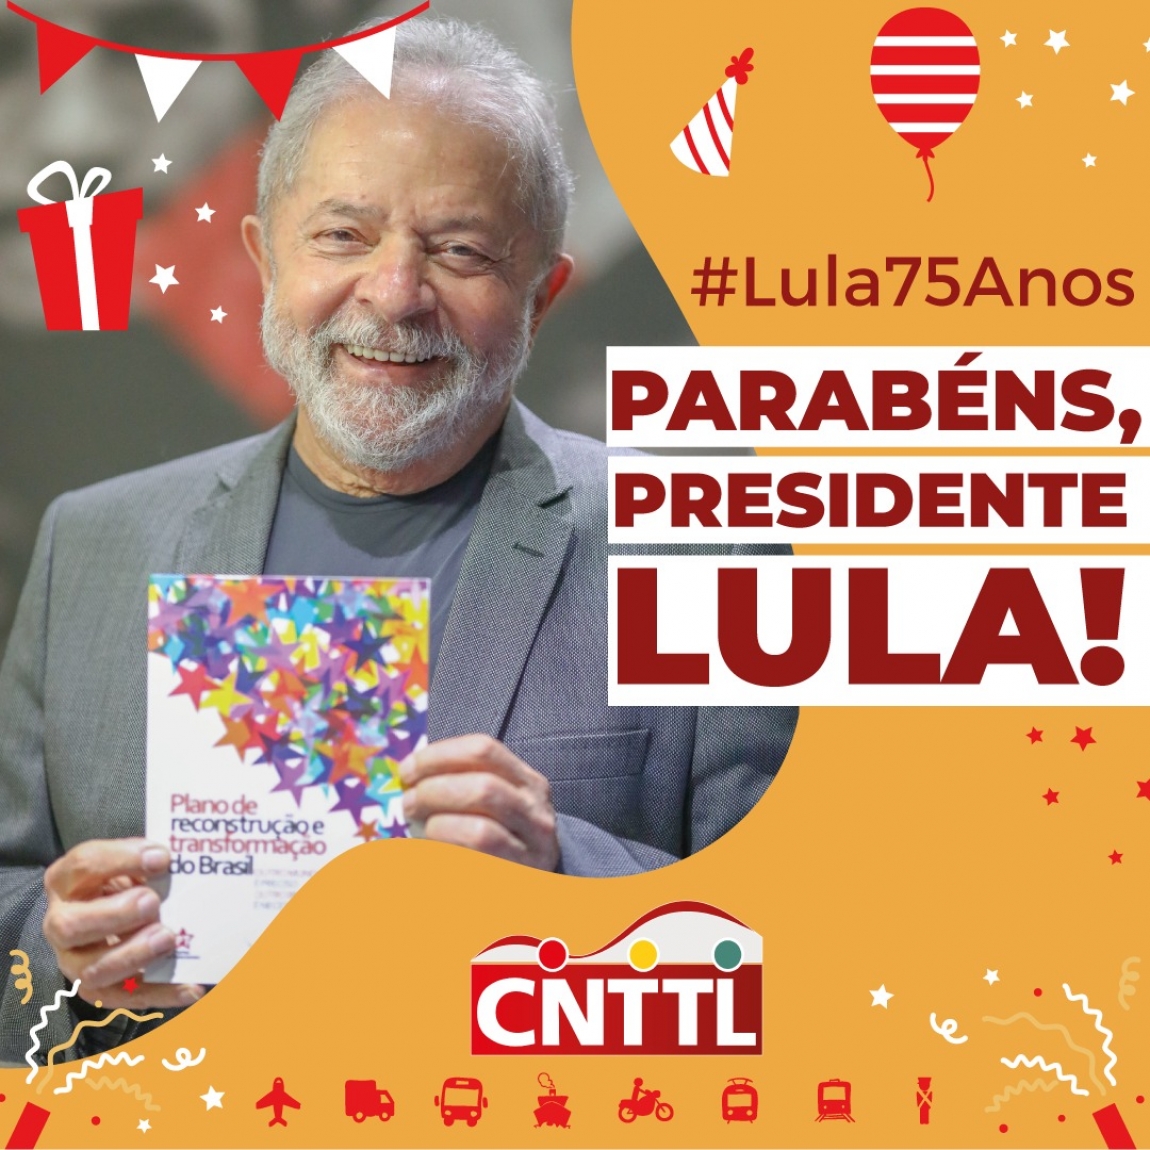 Imagem de #LULA75ANOS CNTTL parabeniza presidente Lula!